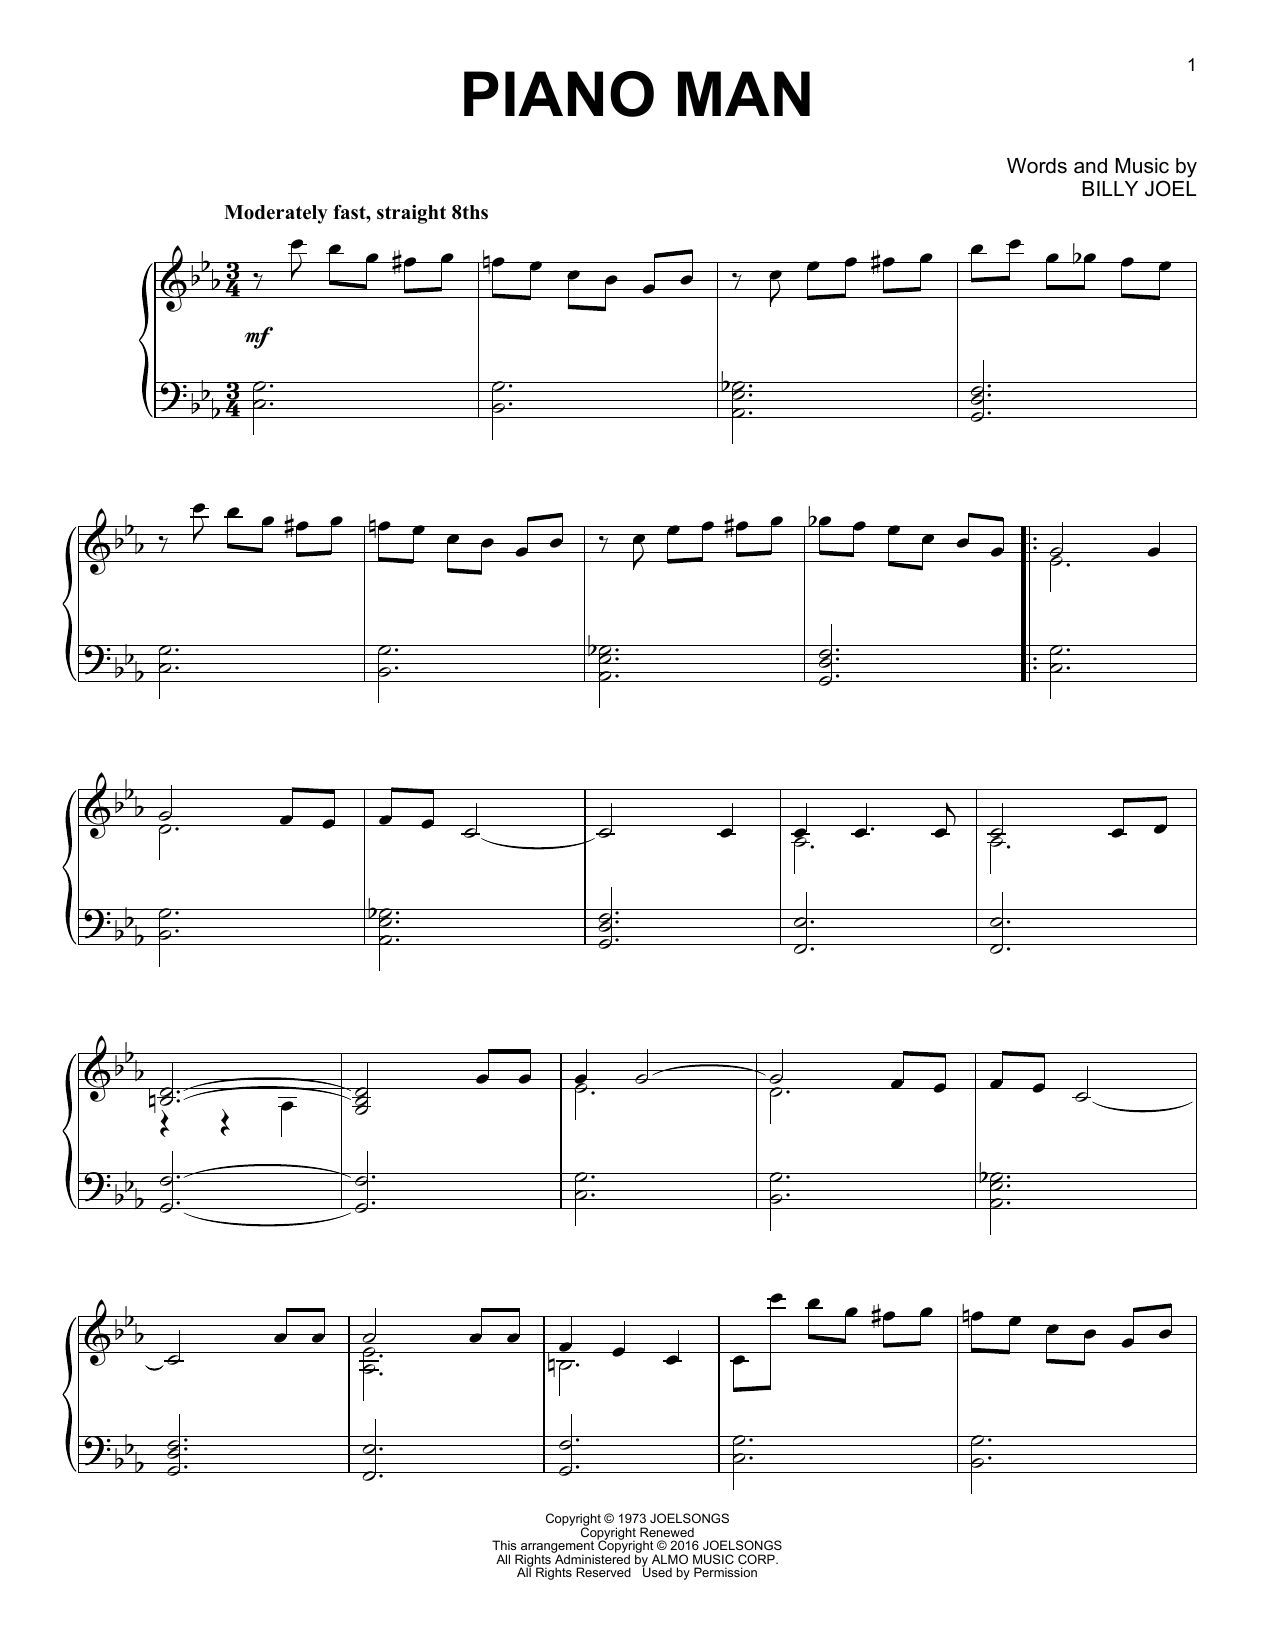 Billy Joel Piano Man [Jazz version] Sheet Music Notes & Chords for Piano - Download or Print PDF